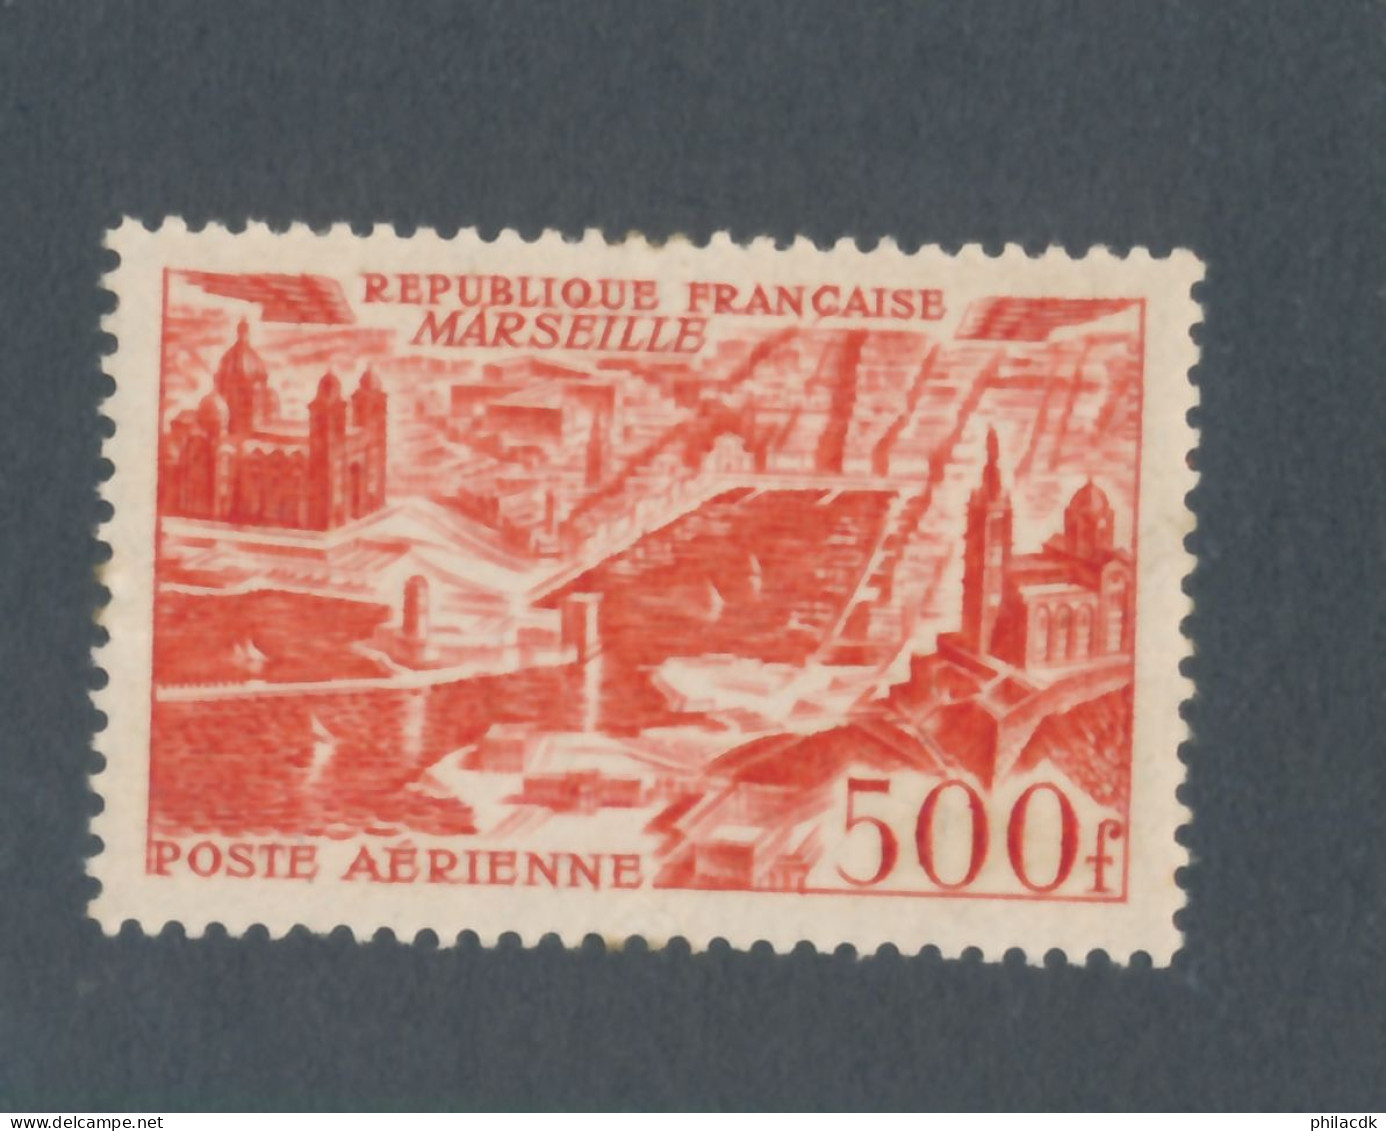 FRANCE - POSTE AERIENNE N° 27 NEUF** SANS CHARNIERE AVEC GOMME NON ORIGINALE (GNO) - COTE : 45€ - 1954 - 1927-1959 Mint/hinged